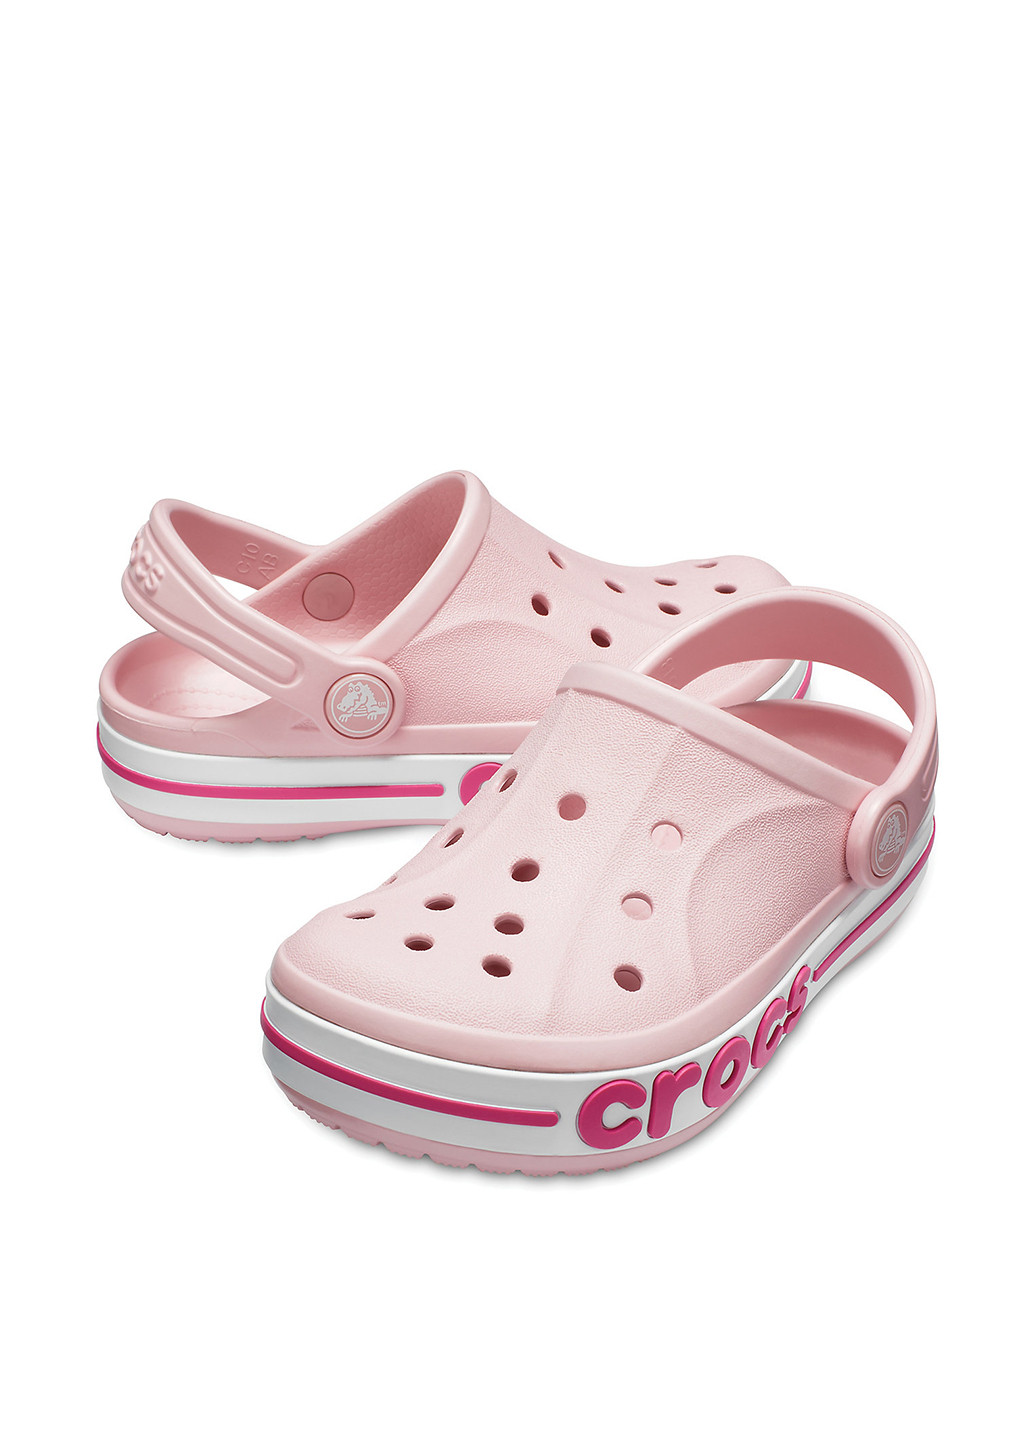 Светло-розовые сабо Crocs без каблука